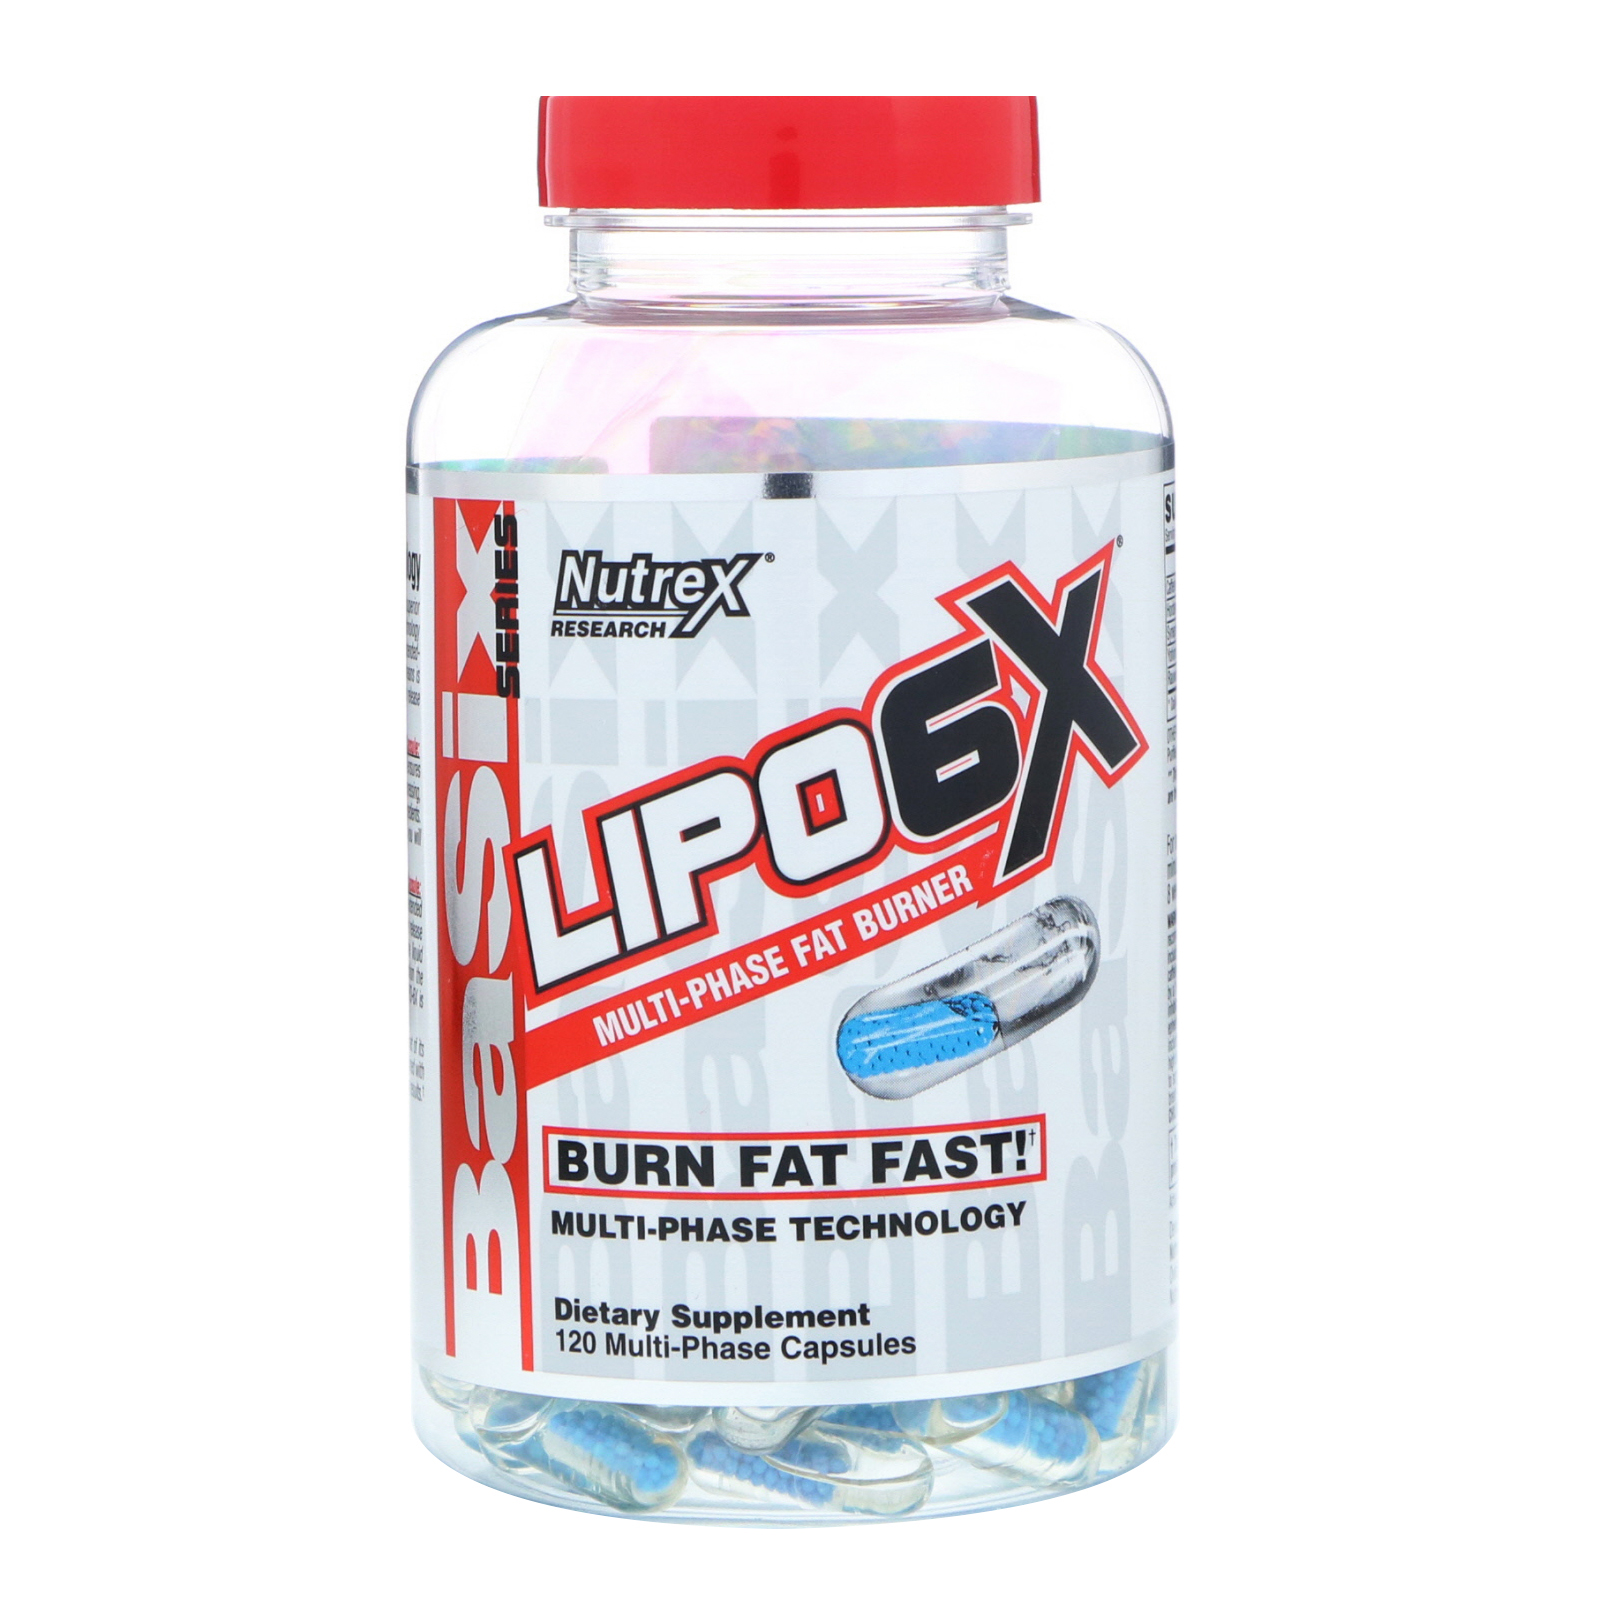 lipo 6x review burner fat)